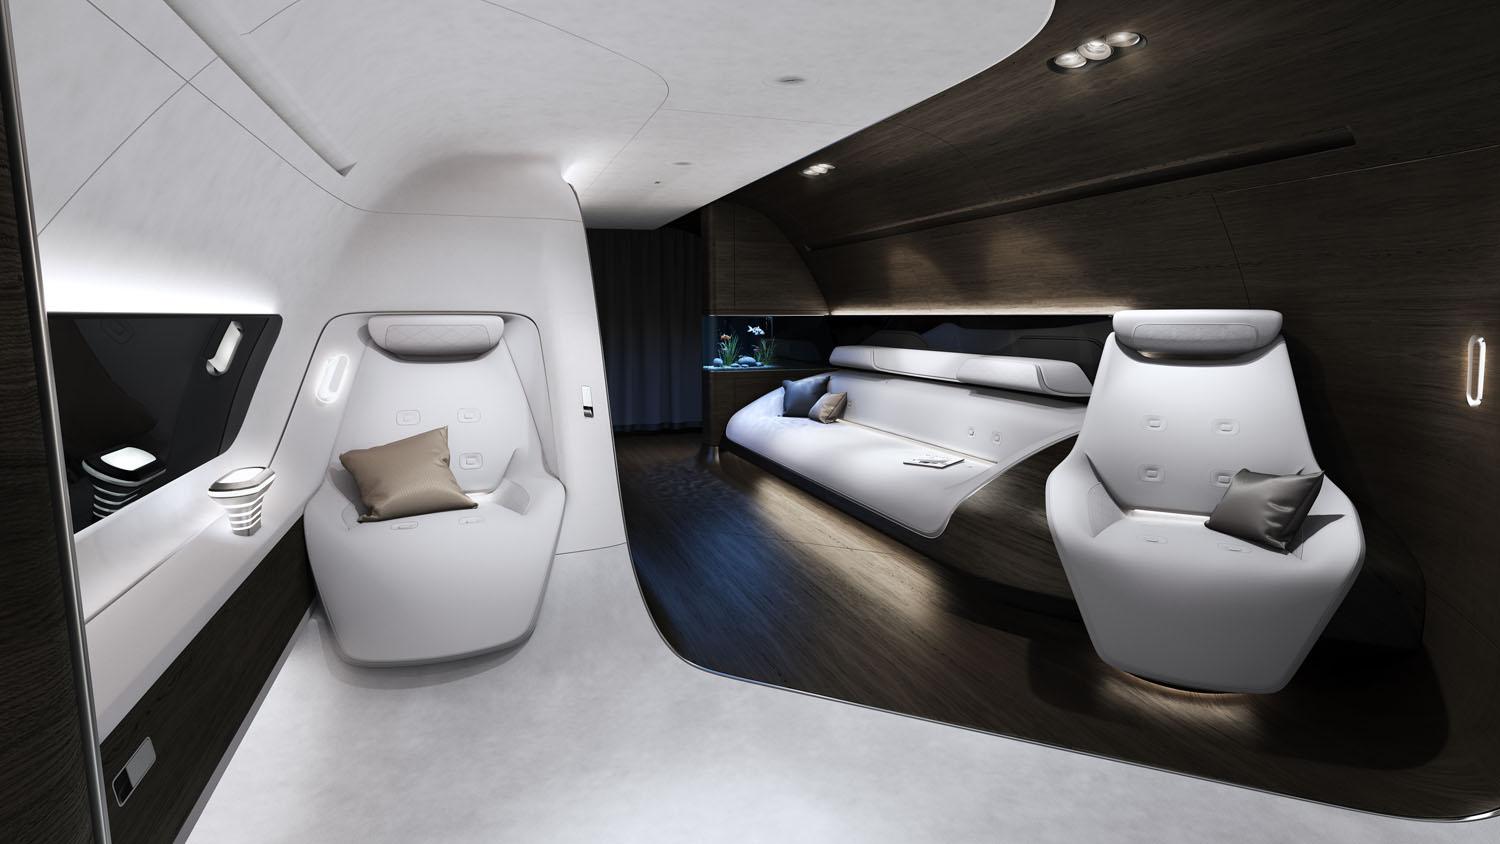 Mercedes-Benz private jet cabin